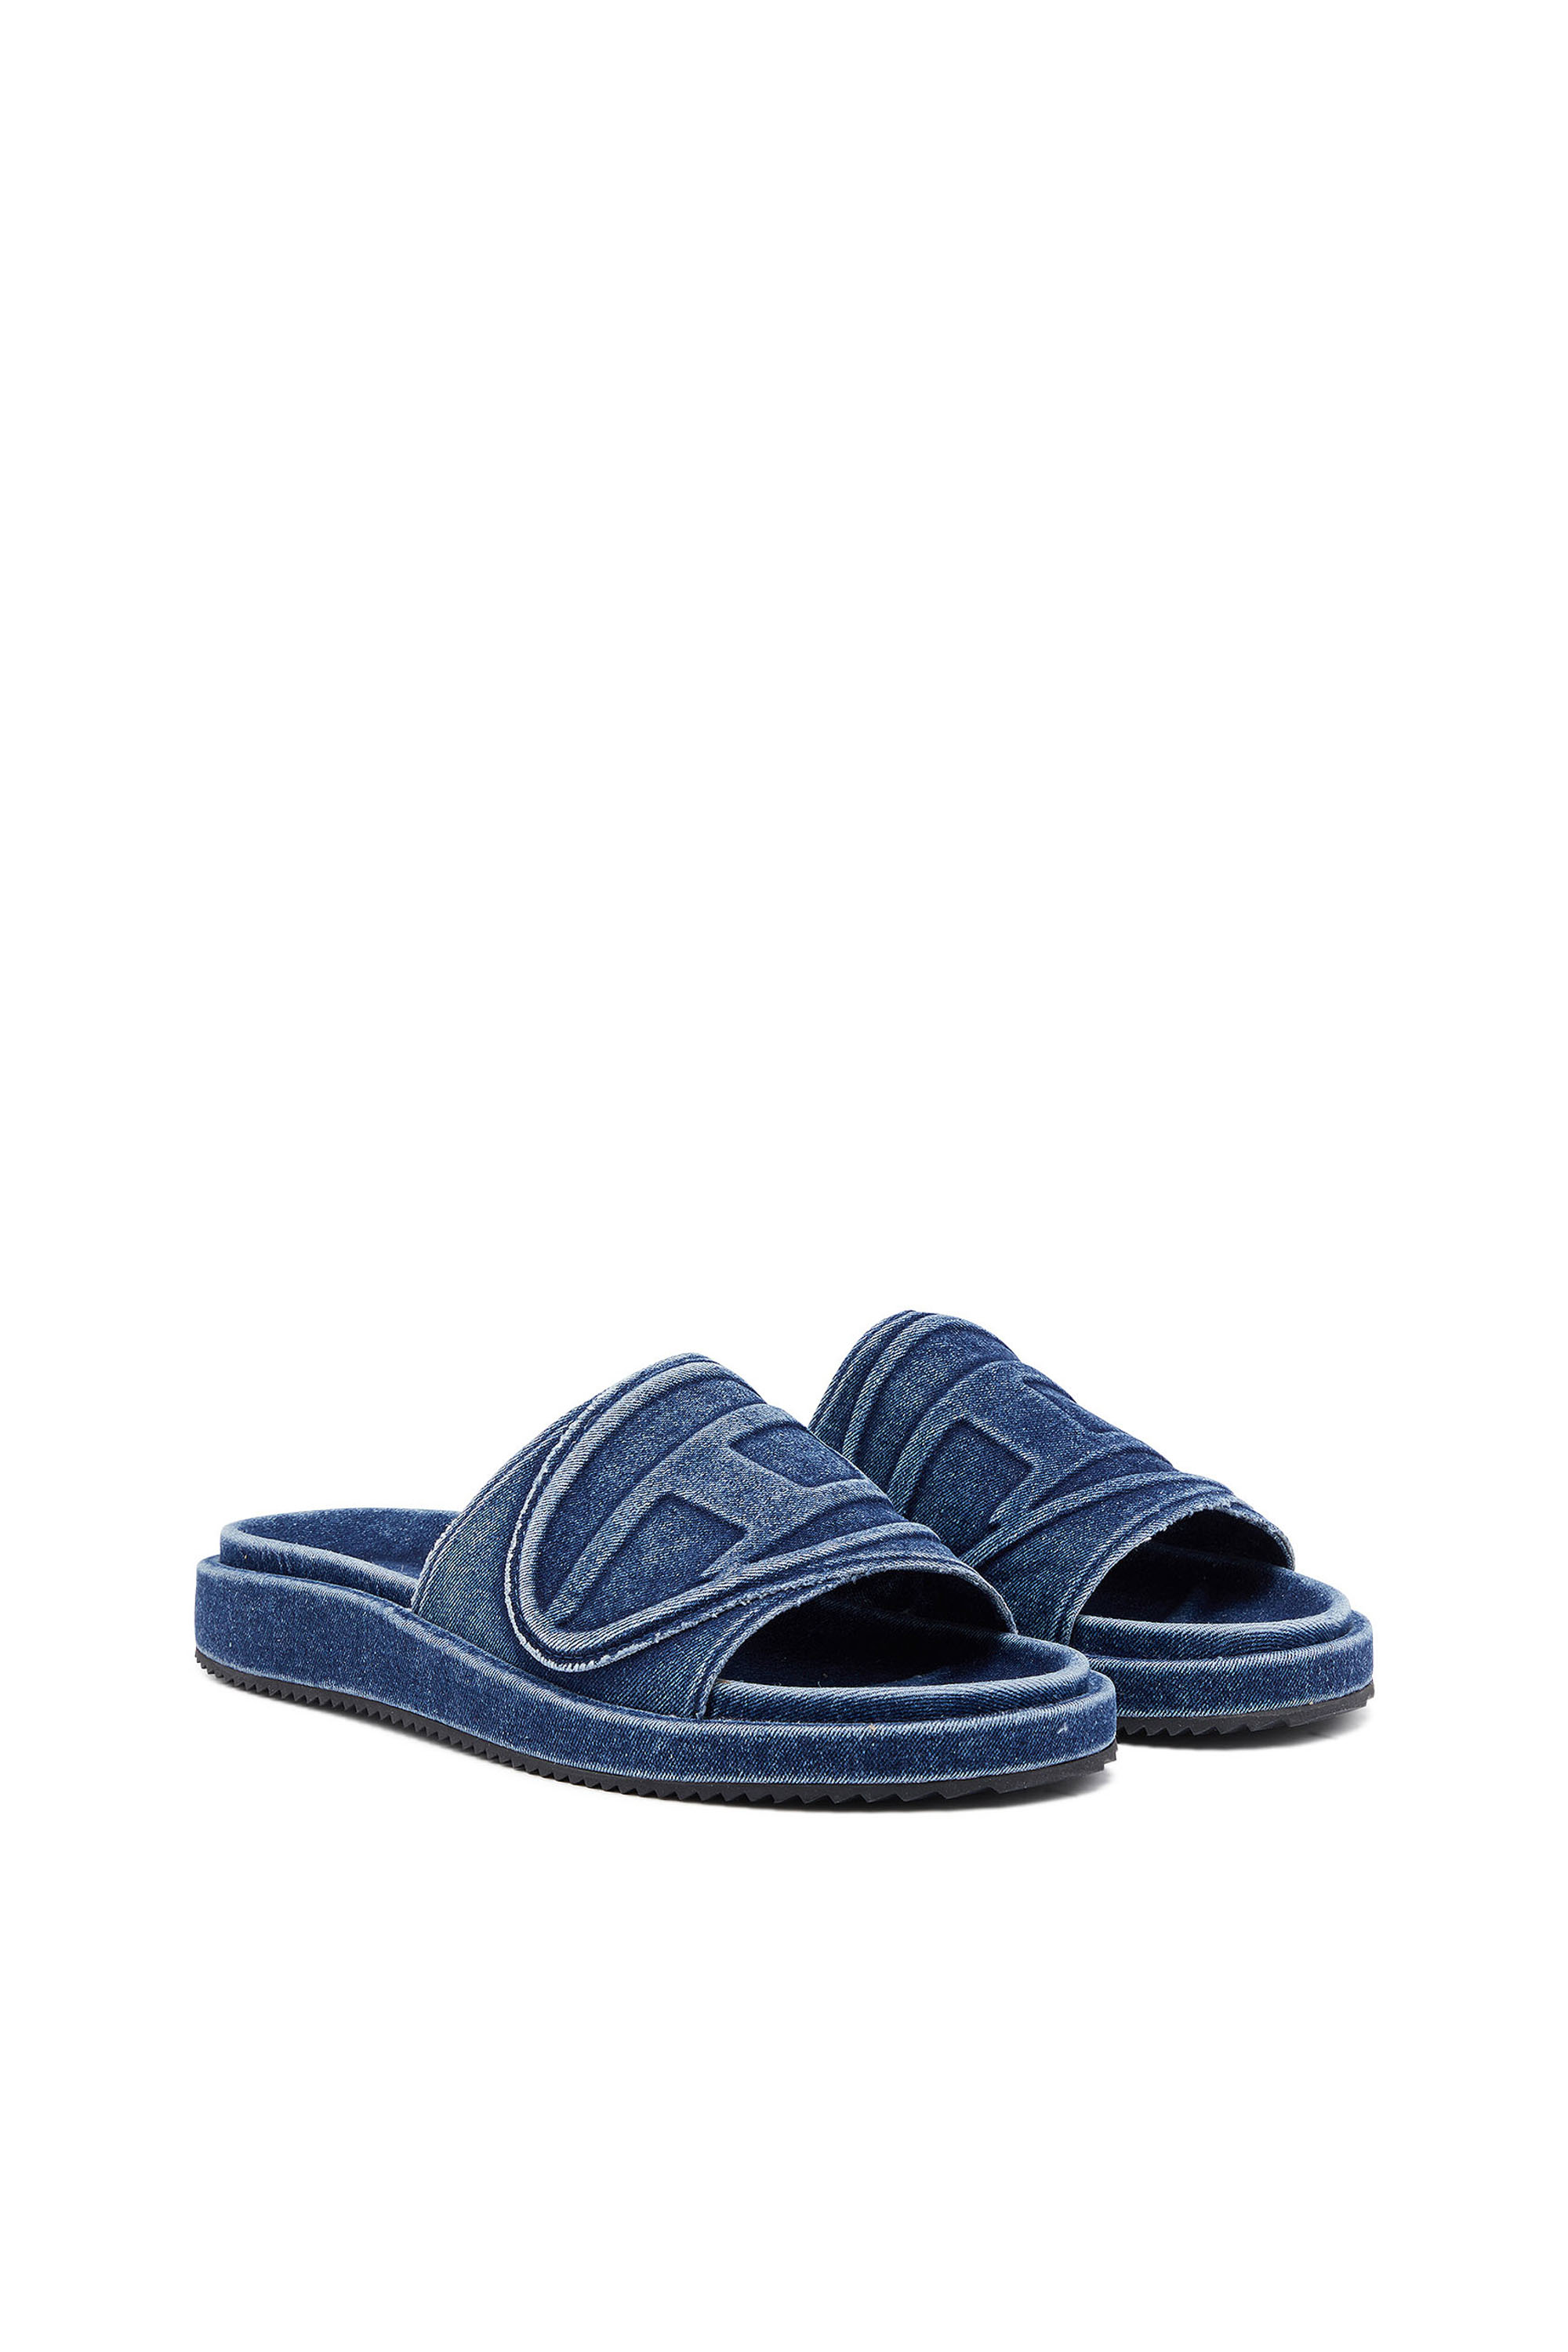 Pin on Flip Flops & sandals ❤️2